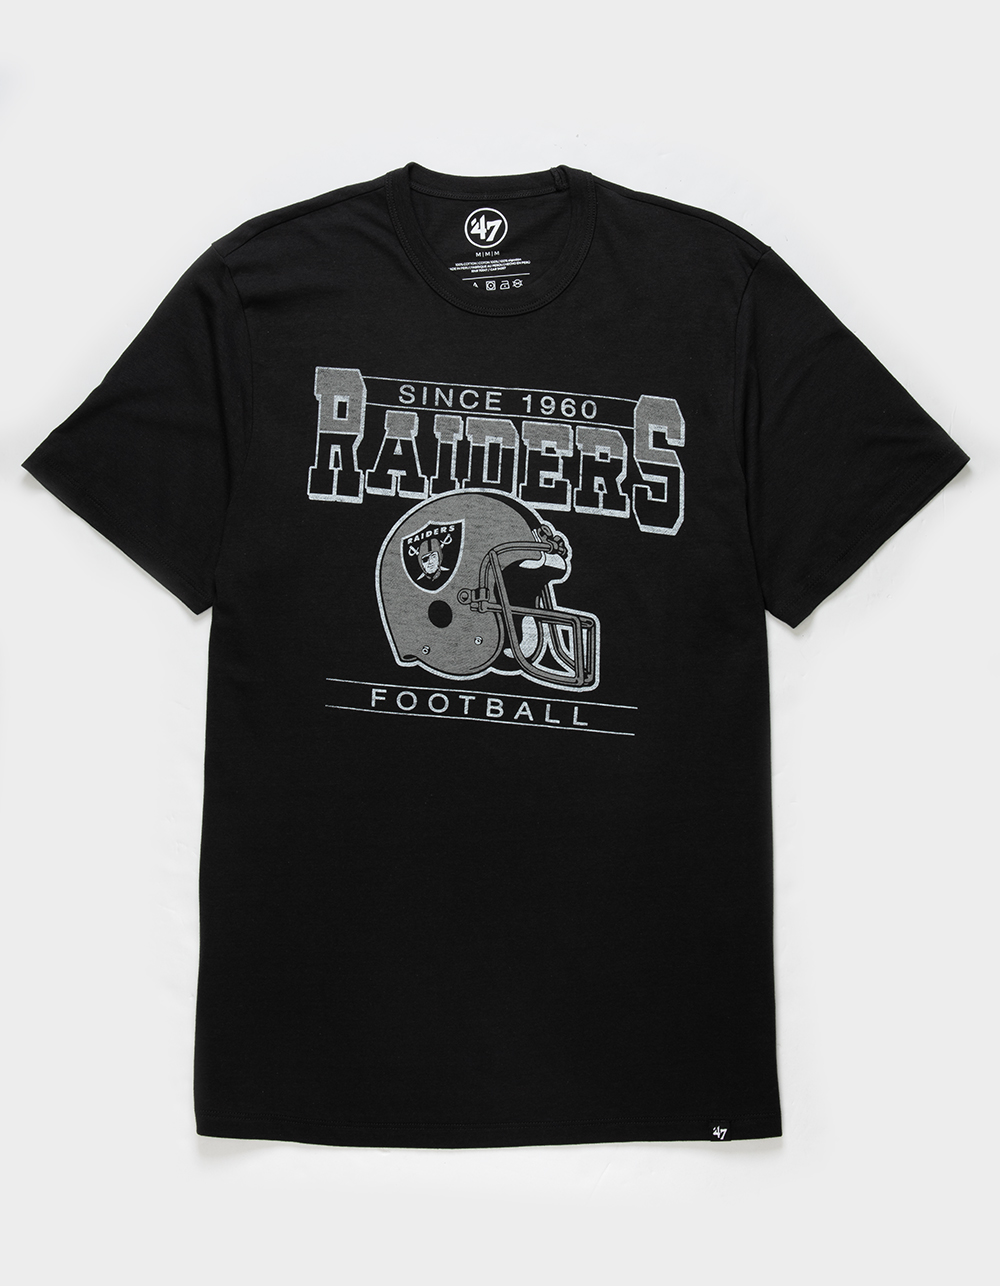 NFL Las Vegas Raiders T Shirt Mens S or M American Football Jersey